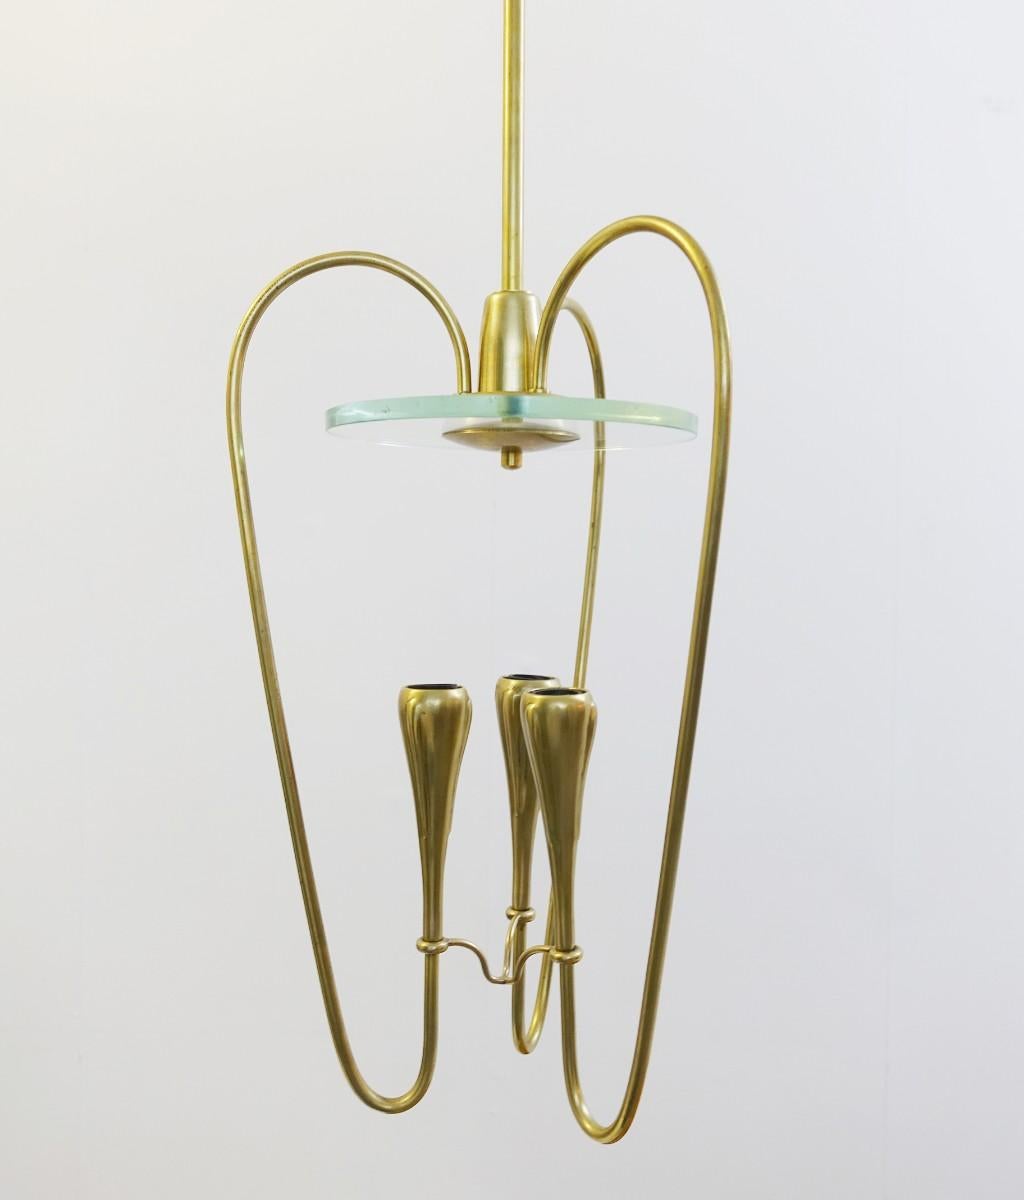 Pair of Italian Fontana Arte style brass and glass pendant light, Italy, 1970s.